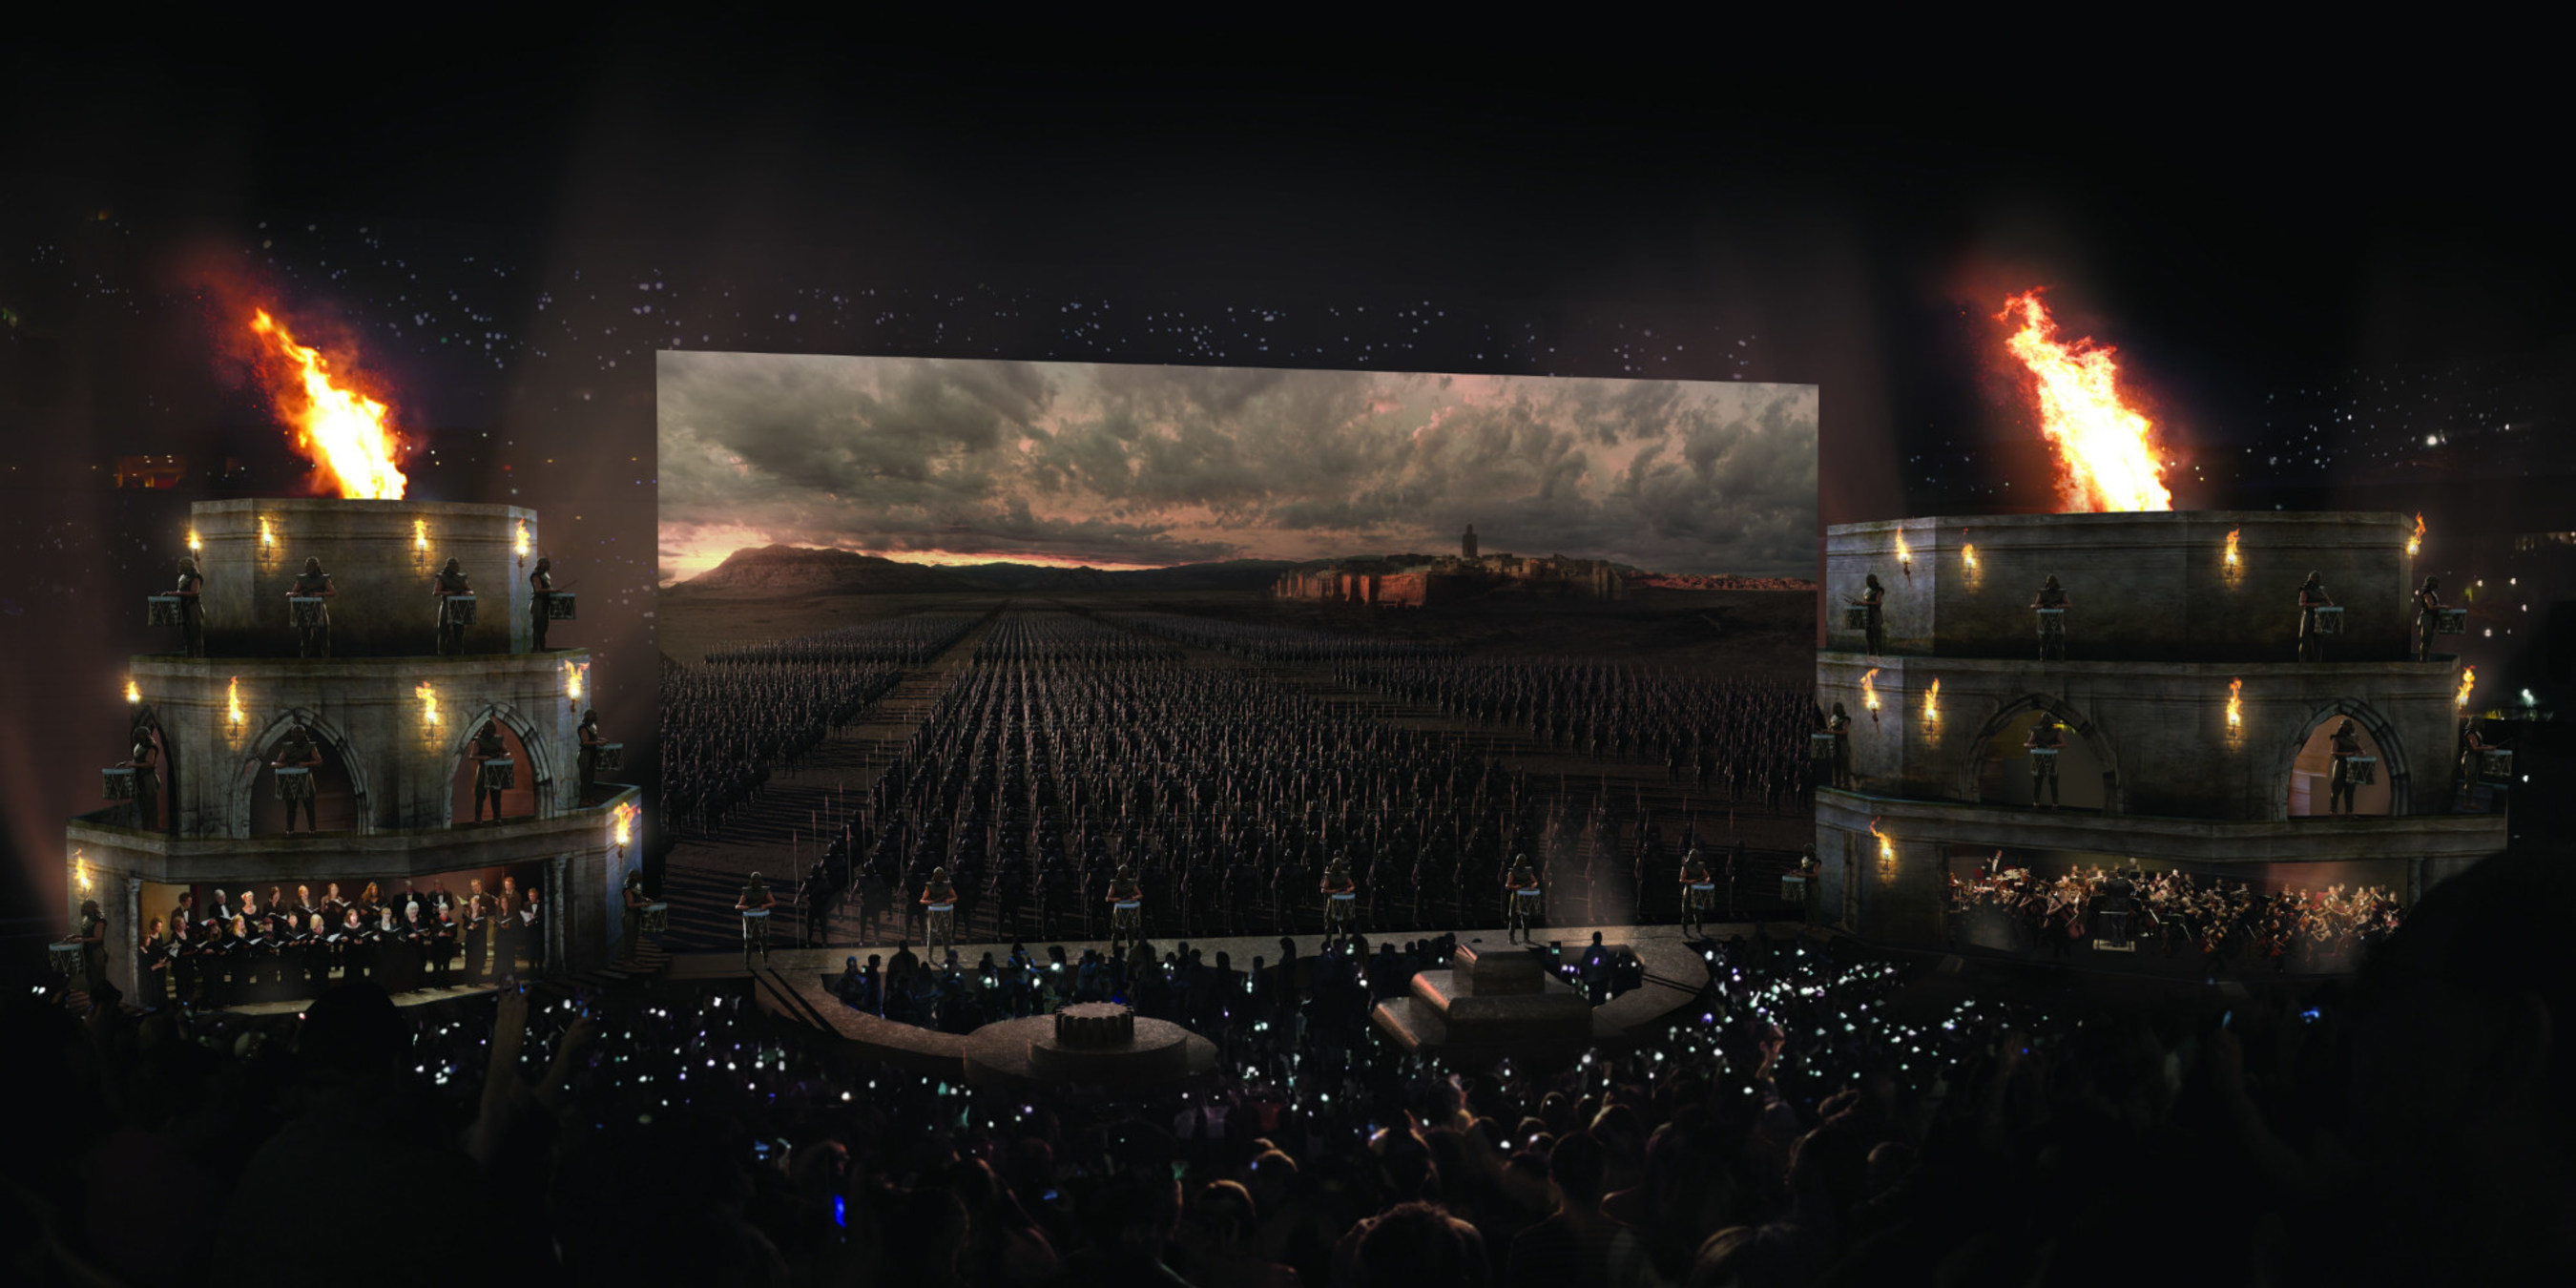 Concept art of Game of Thrones(R) Live Concert Experience only. Download photo here: https://www.dropbox.com/sh/126qt1mfz24q6hc/AAAv7Lj-FftBc7ssssAS8Hyba?dl=0